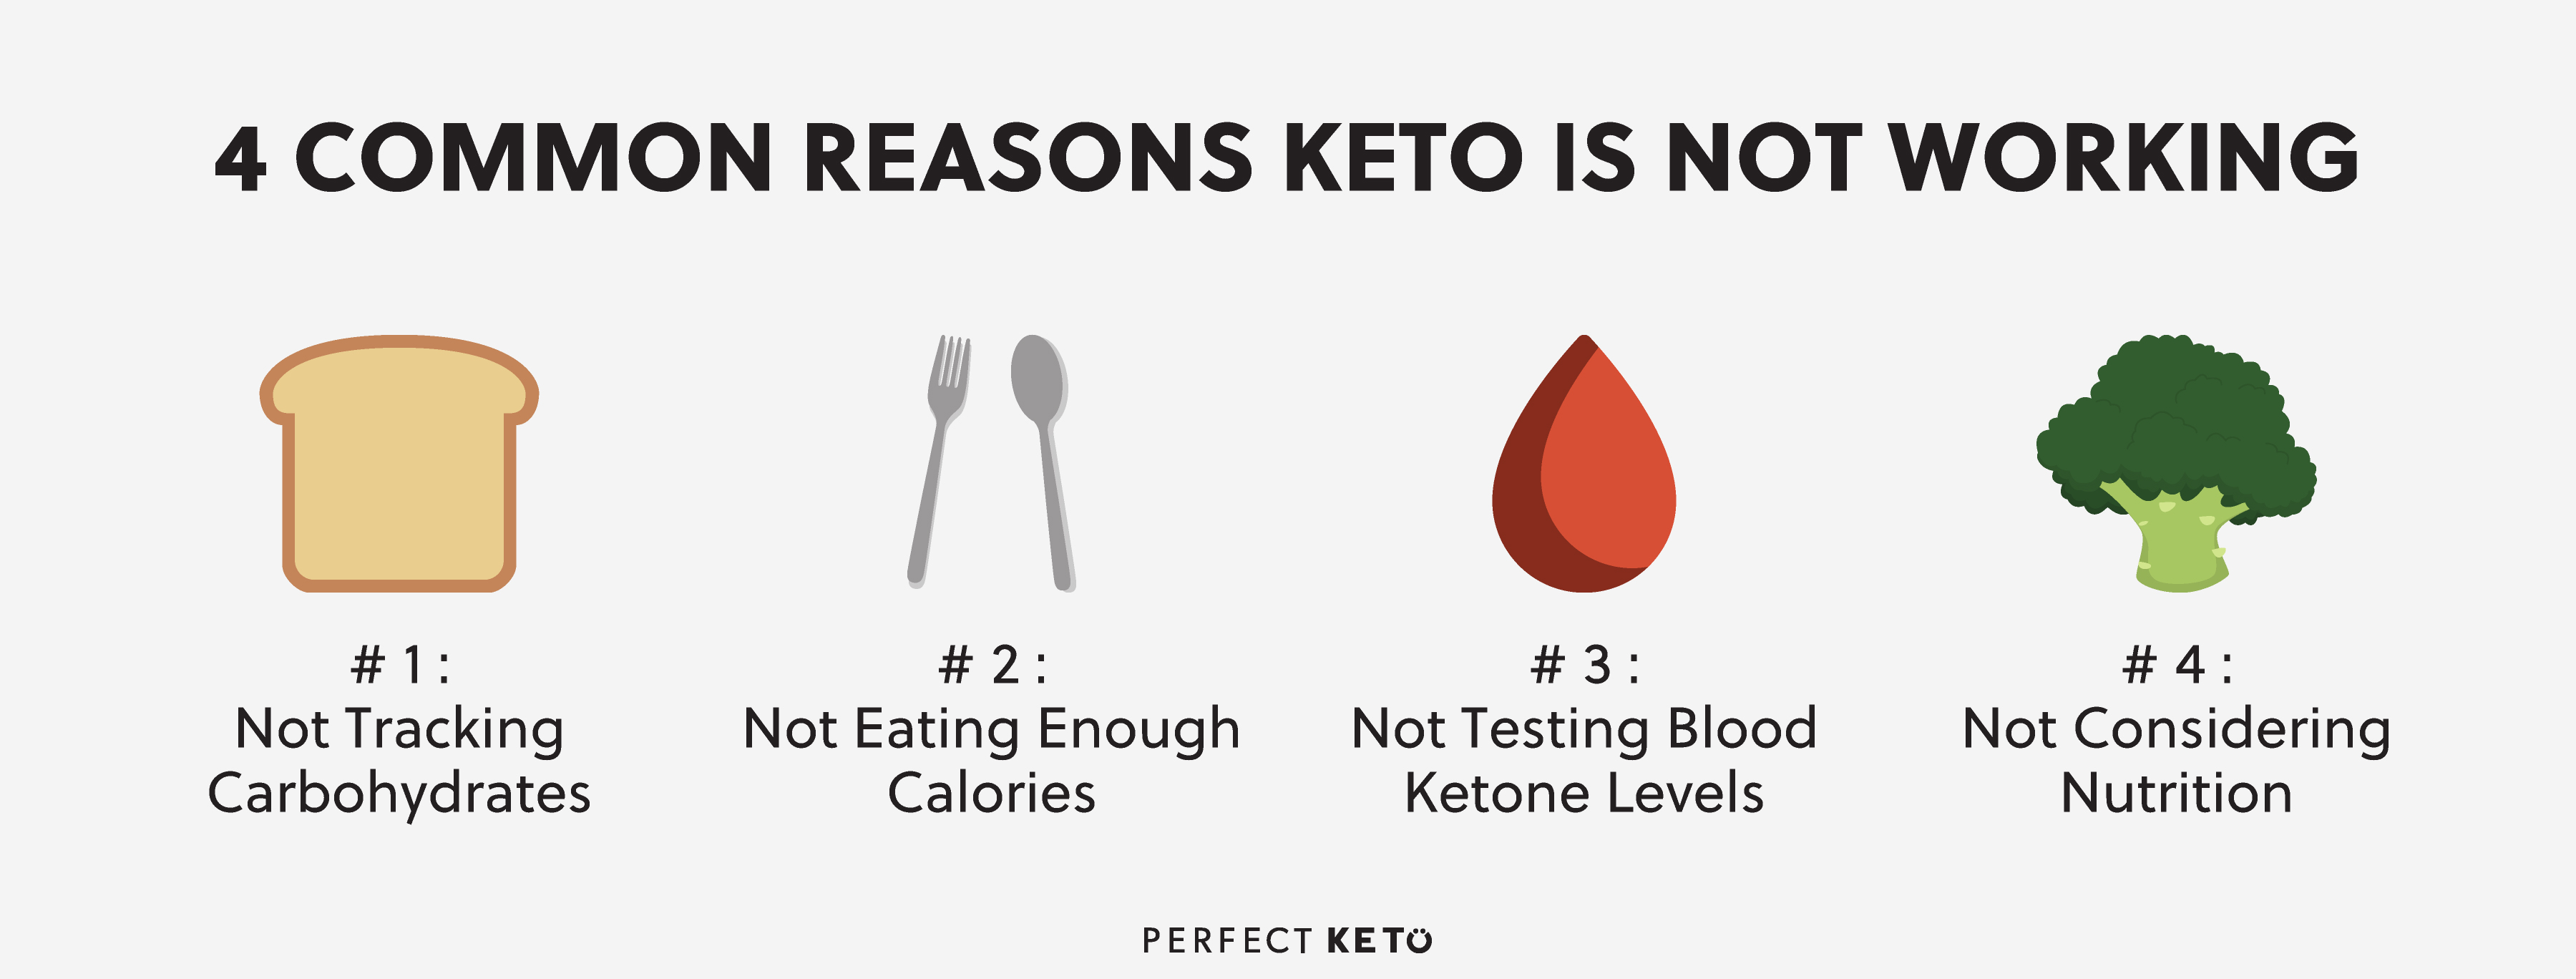 4-common-reasons-keto-is-not-working.jpg